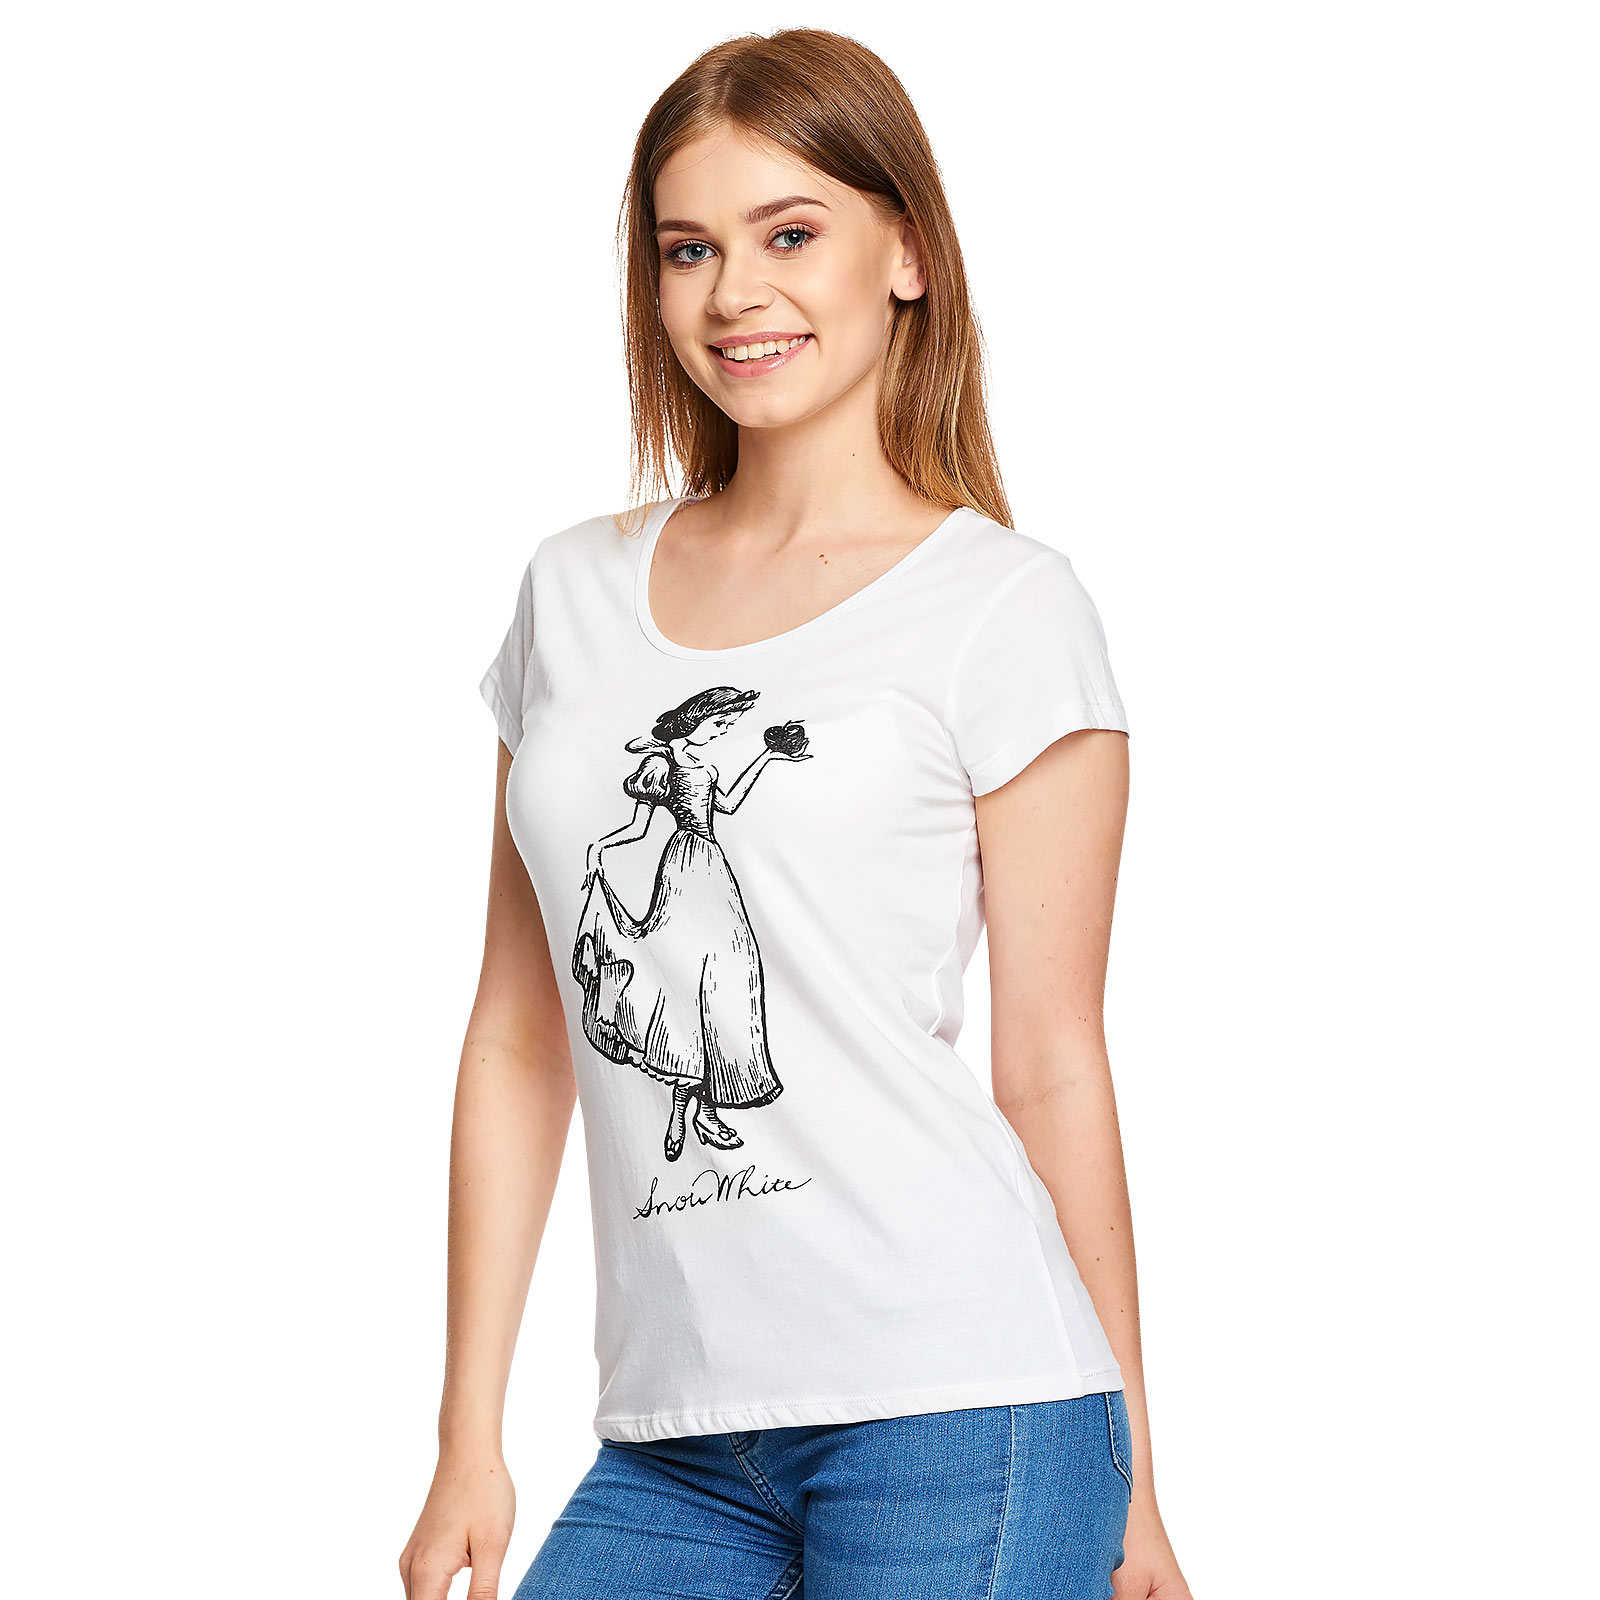 Schneewittchen - Disney Princess T-Shirt Damen weiß